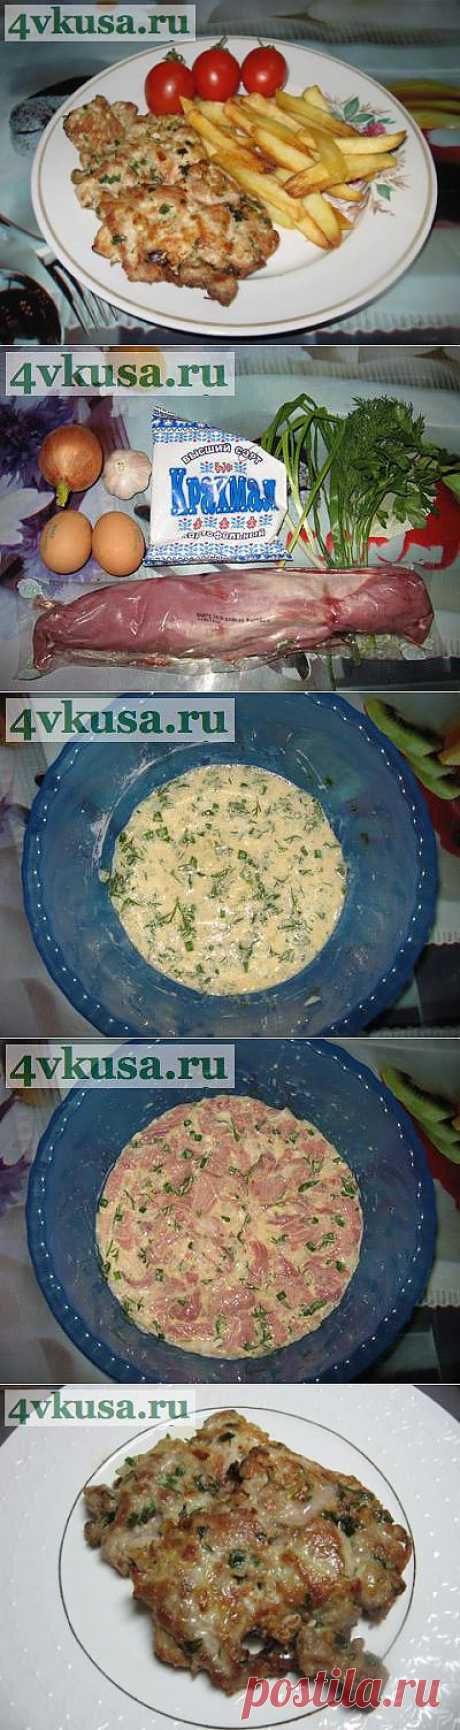 Мясо фри за 5 минут. Фоторецепт. | 4vkusa.ru